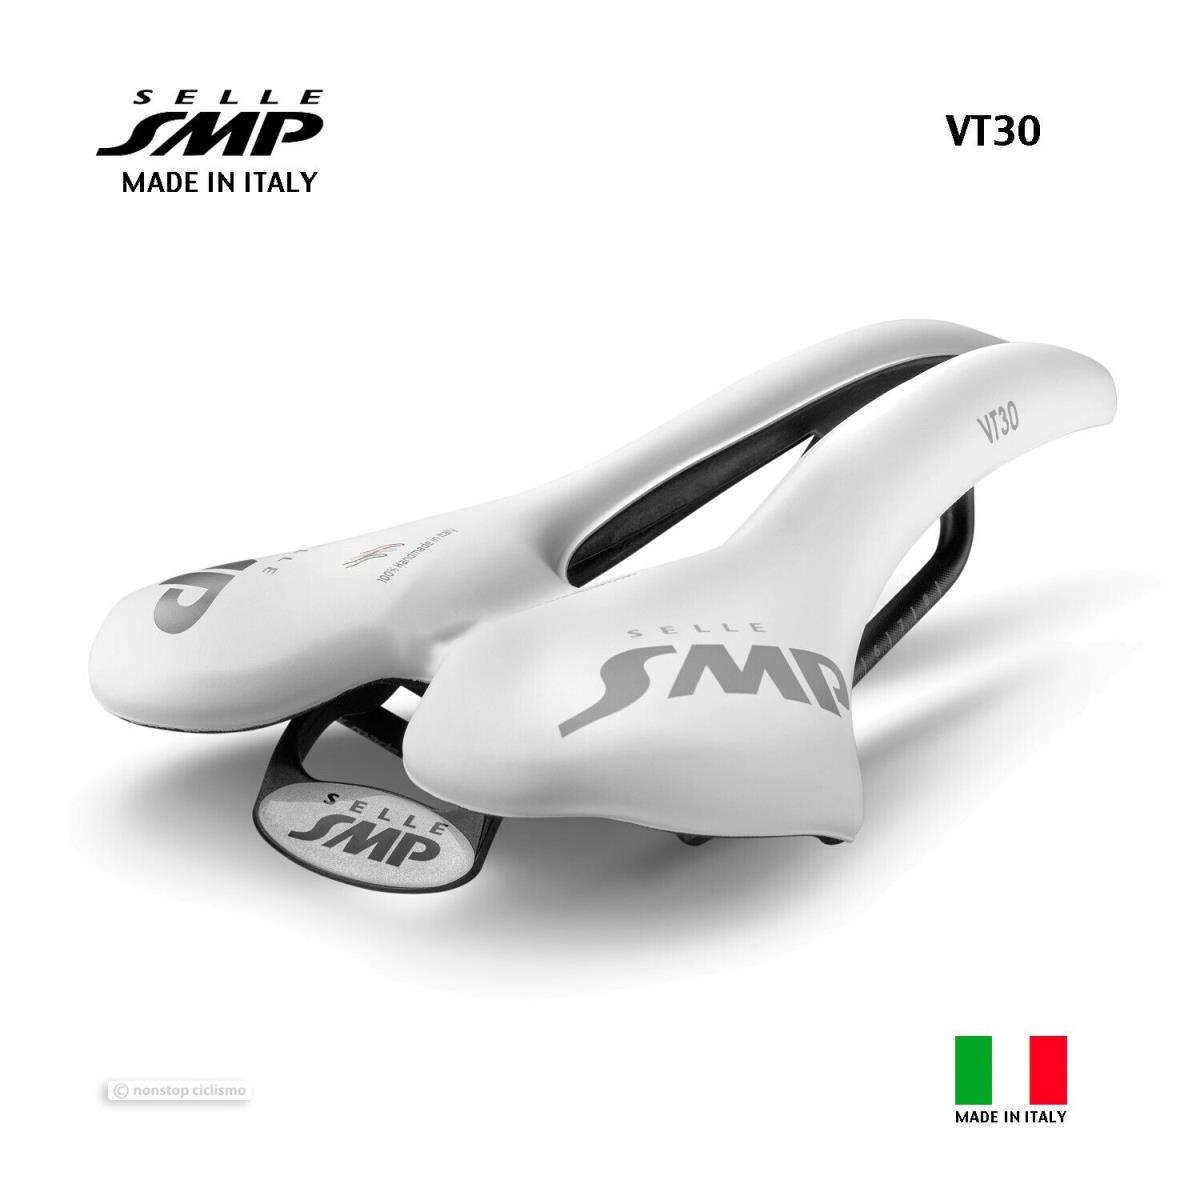 Selle Smp VT30 Saddle : Velvet Touch White - Made IN Italy